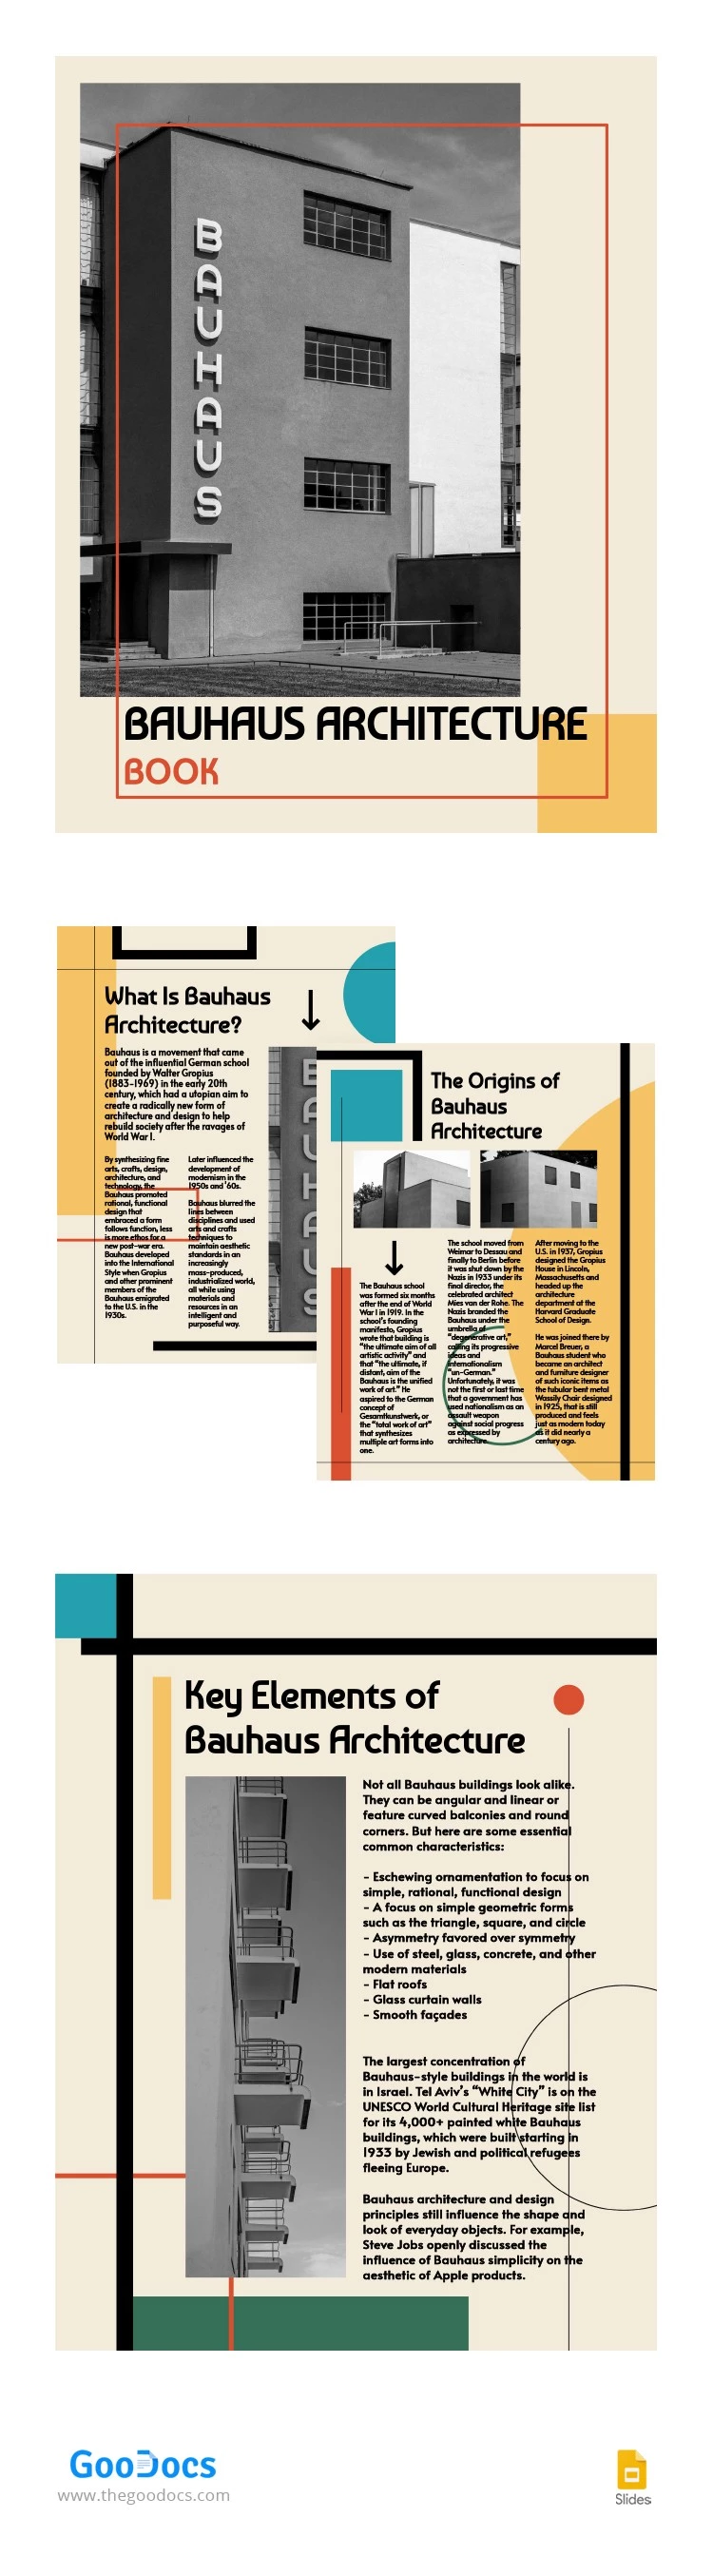 Libro de Arquitectura de la Bauhaus - free Google Docs Template - 10064507